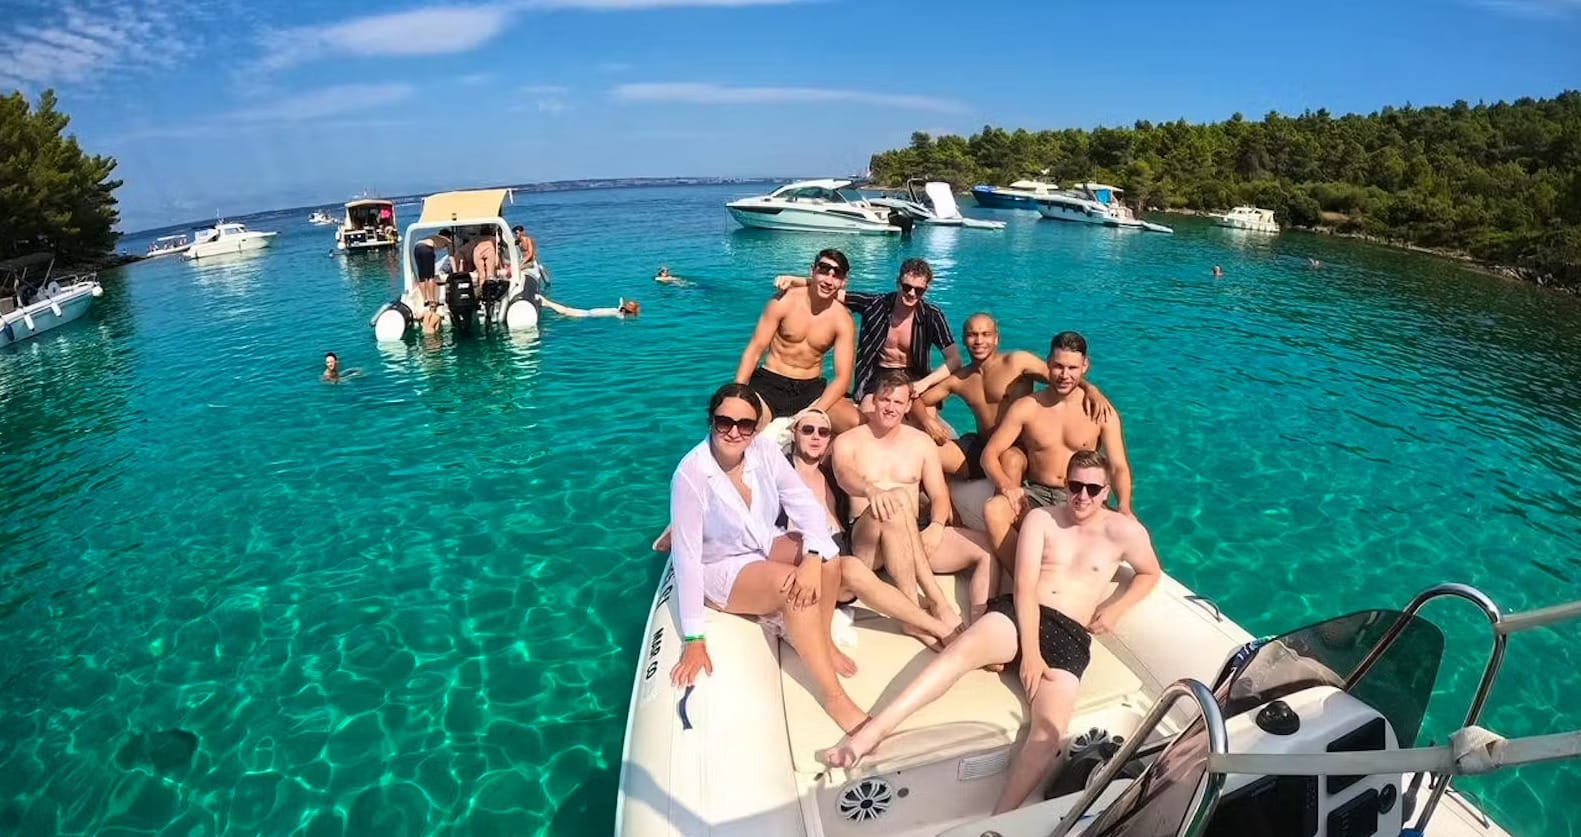 Group of young people enjoying their boat trip do Dugi otok island near Zadar 